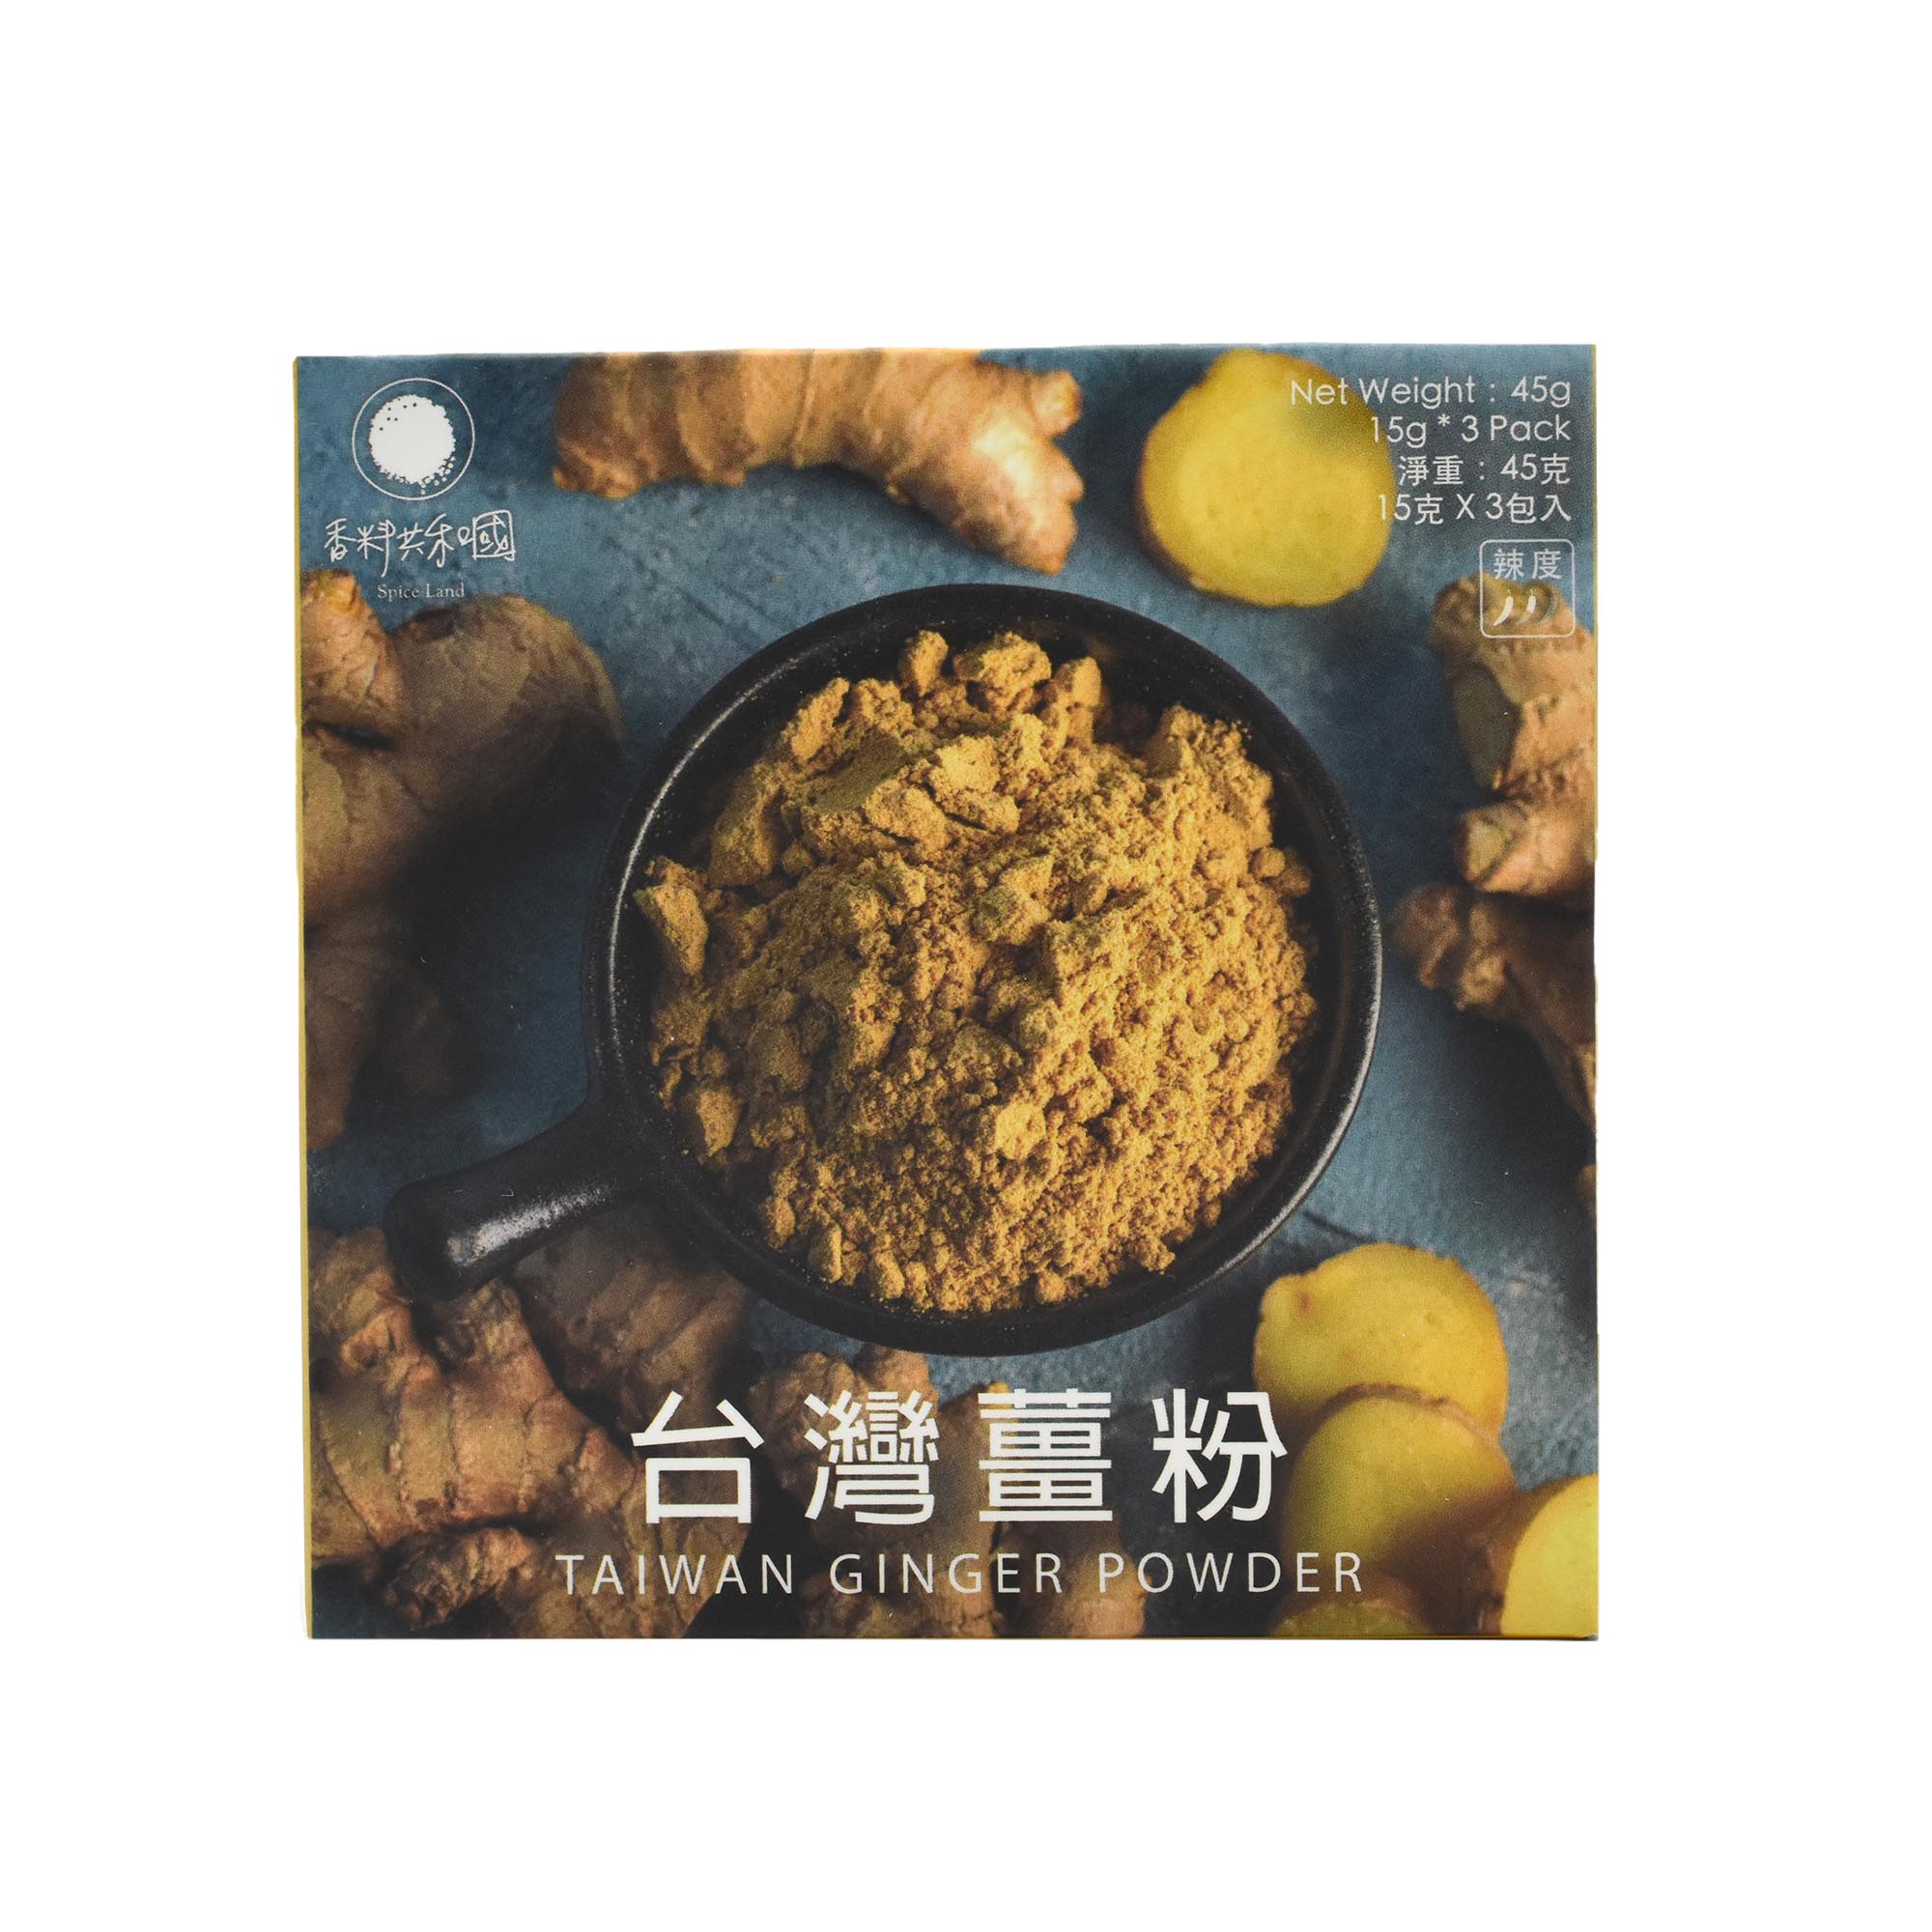 Spice Land - Taiwan Ginger Powder